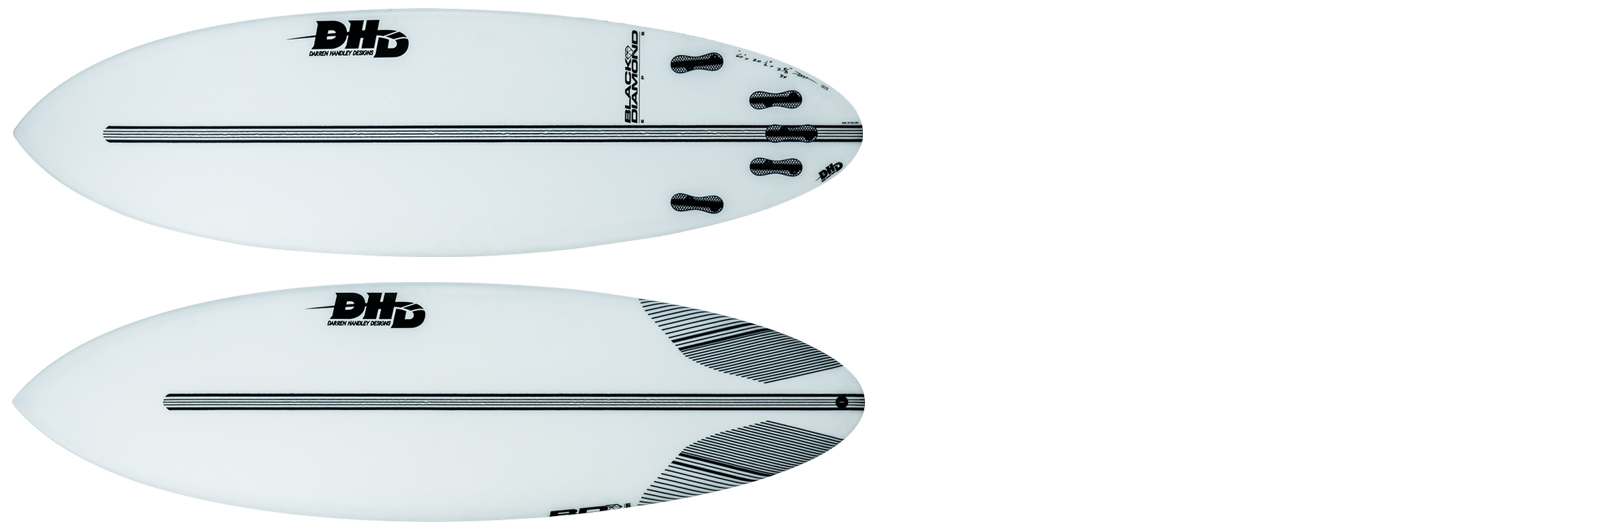 Black Diamond EPS Boardcave DHD Surfboards